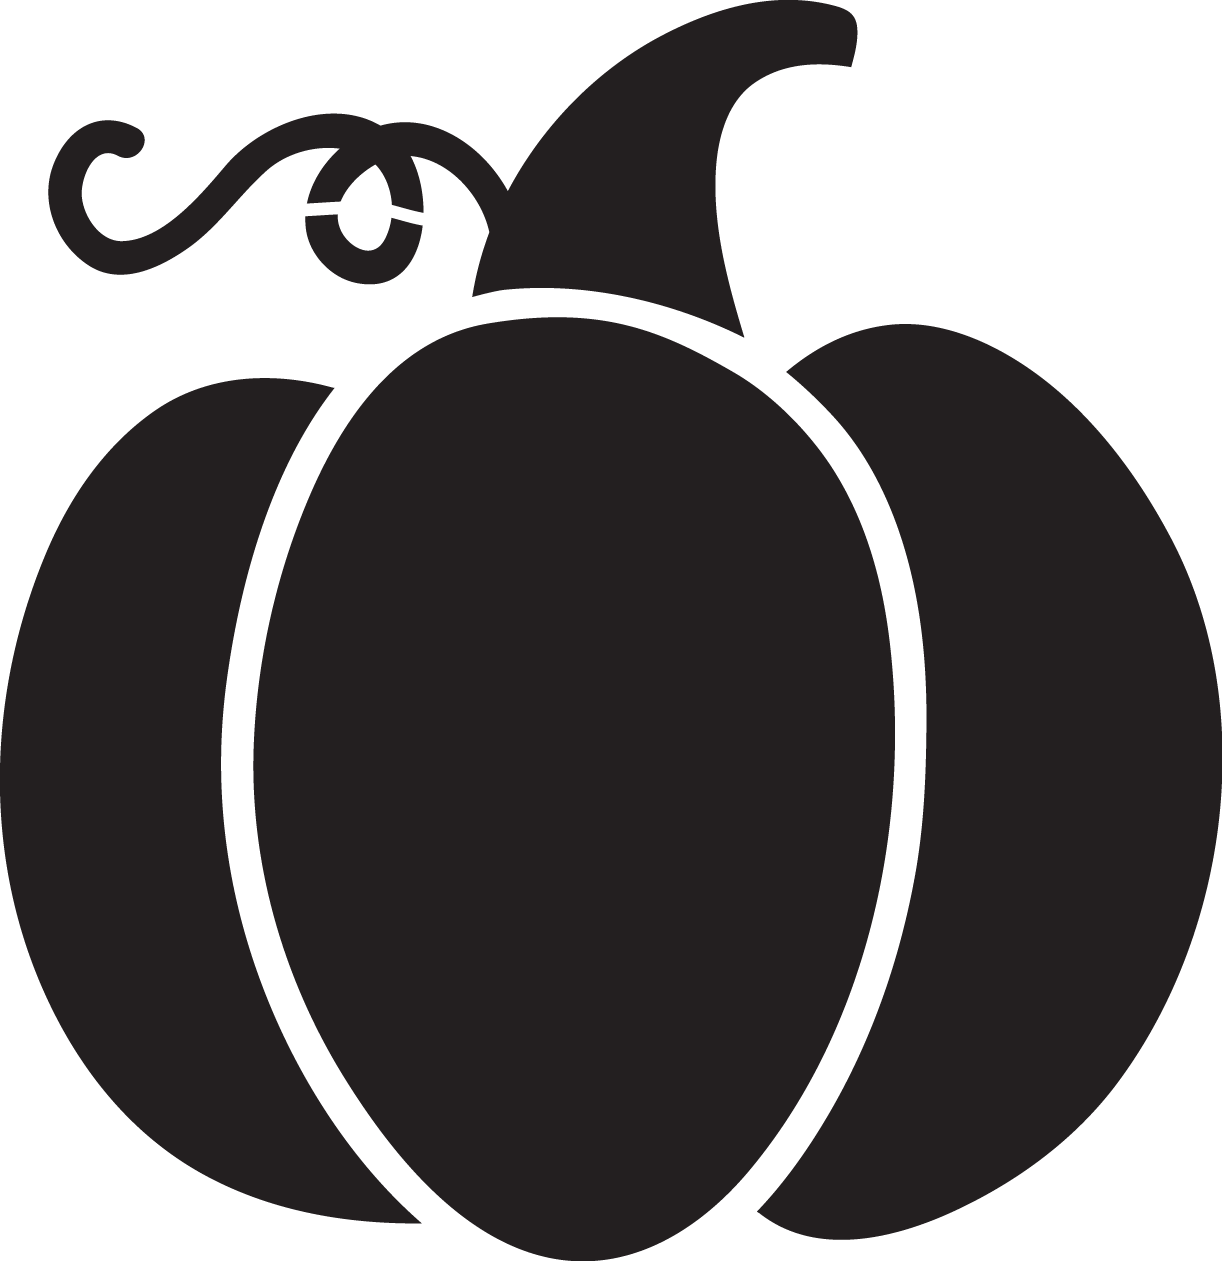 Pumpkin Silhouette Png at GetDrawings | Free download